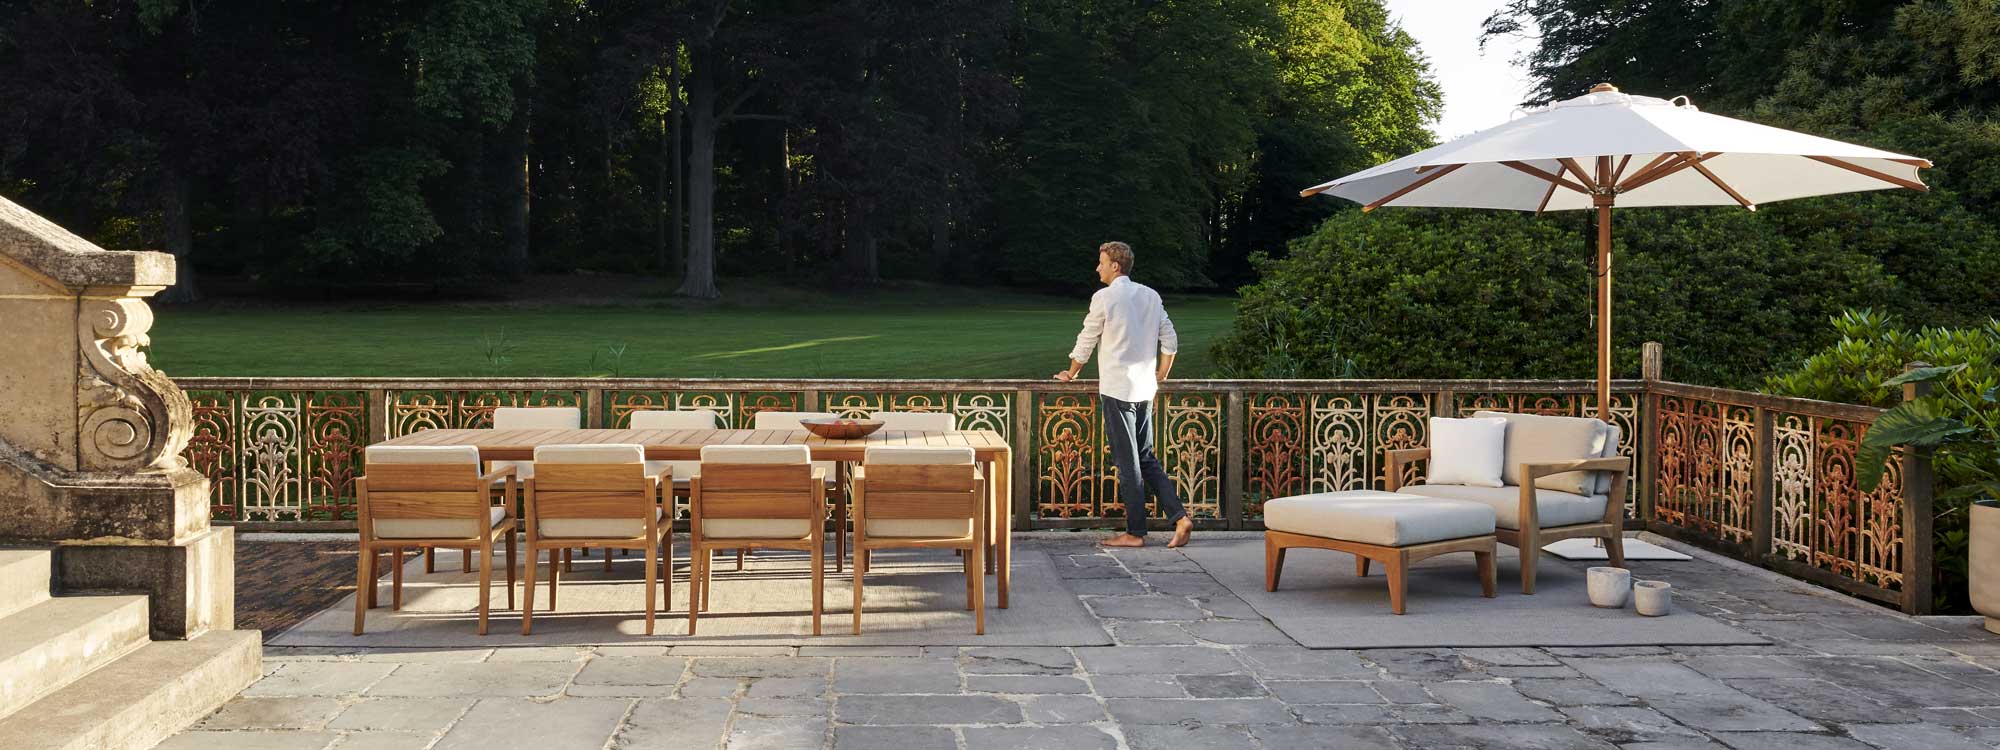 Zenhit sofa & modern teak chair is a luxury garden dining chair in high quality garden furniture materials by Royal Botania modern garden furniture